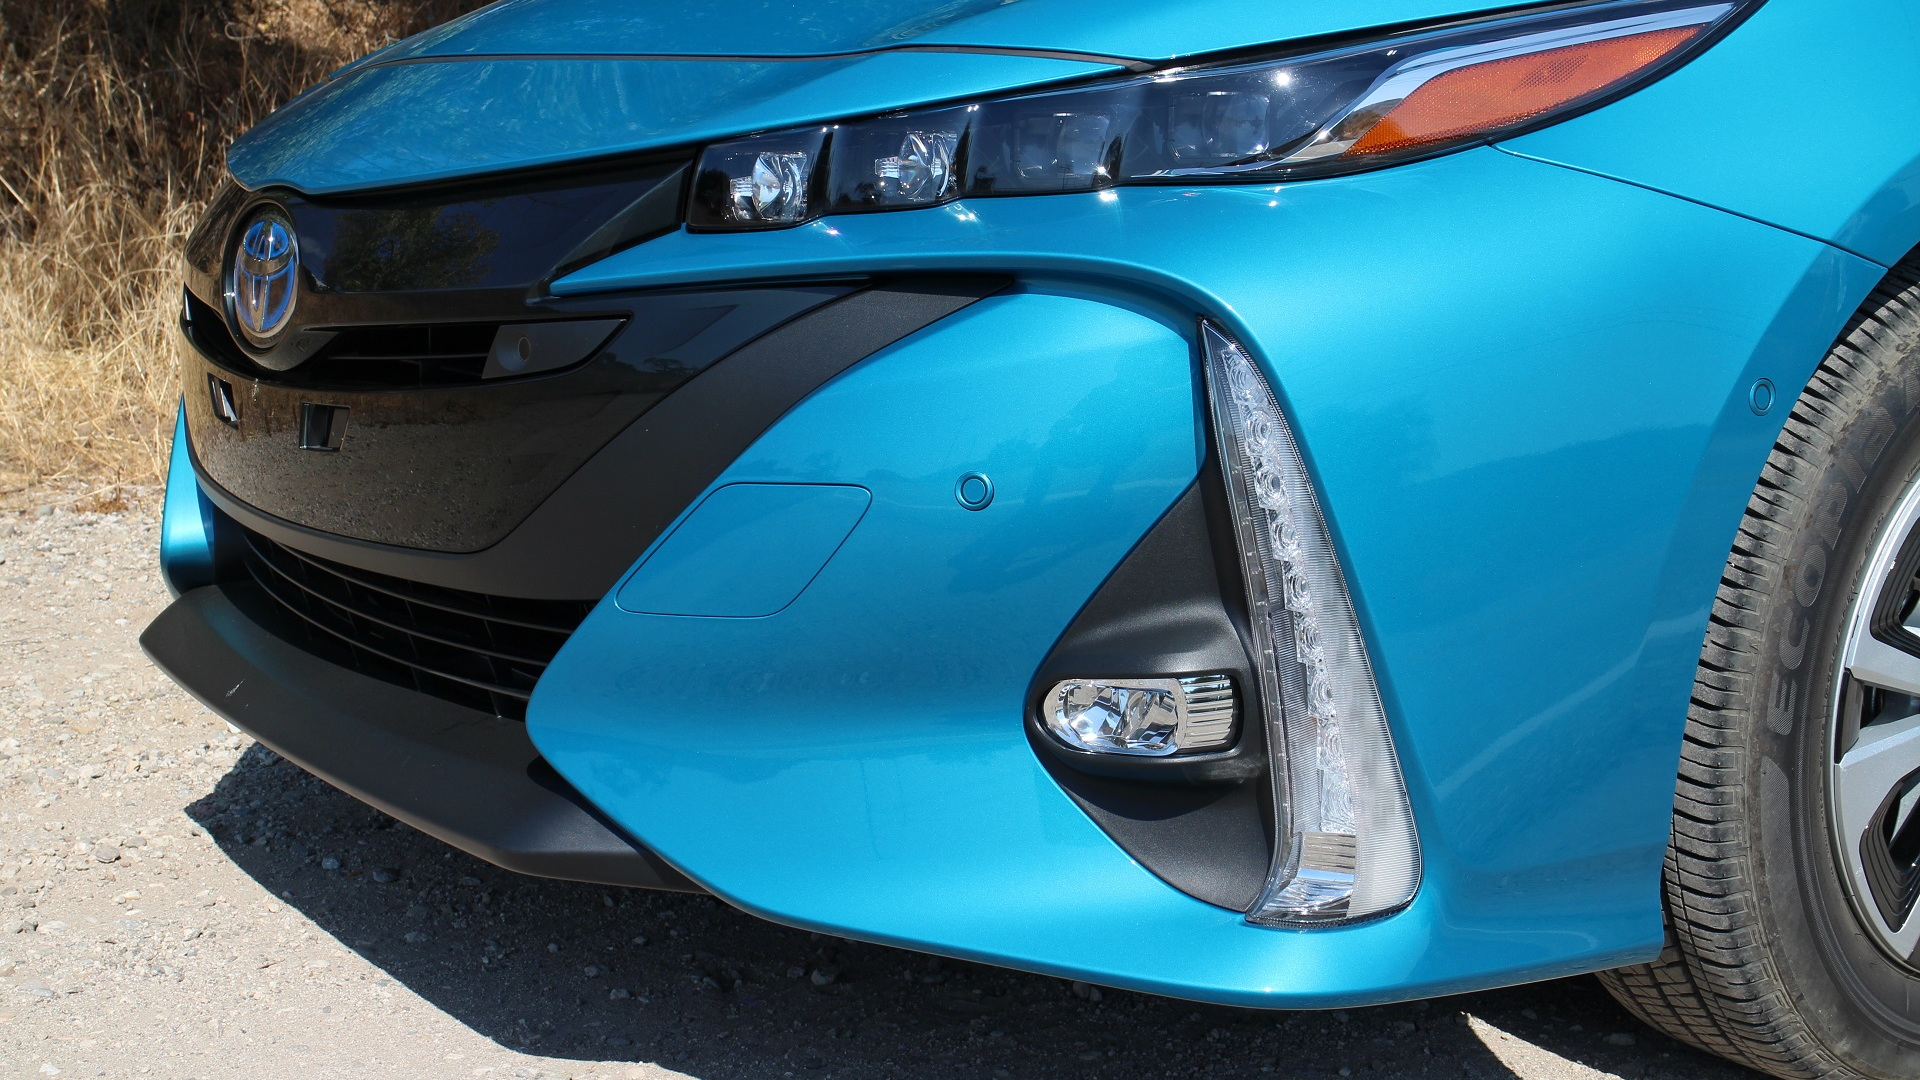 2017 Toyota Prius Prime test drive, Ojai, California, Sep 2016